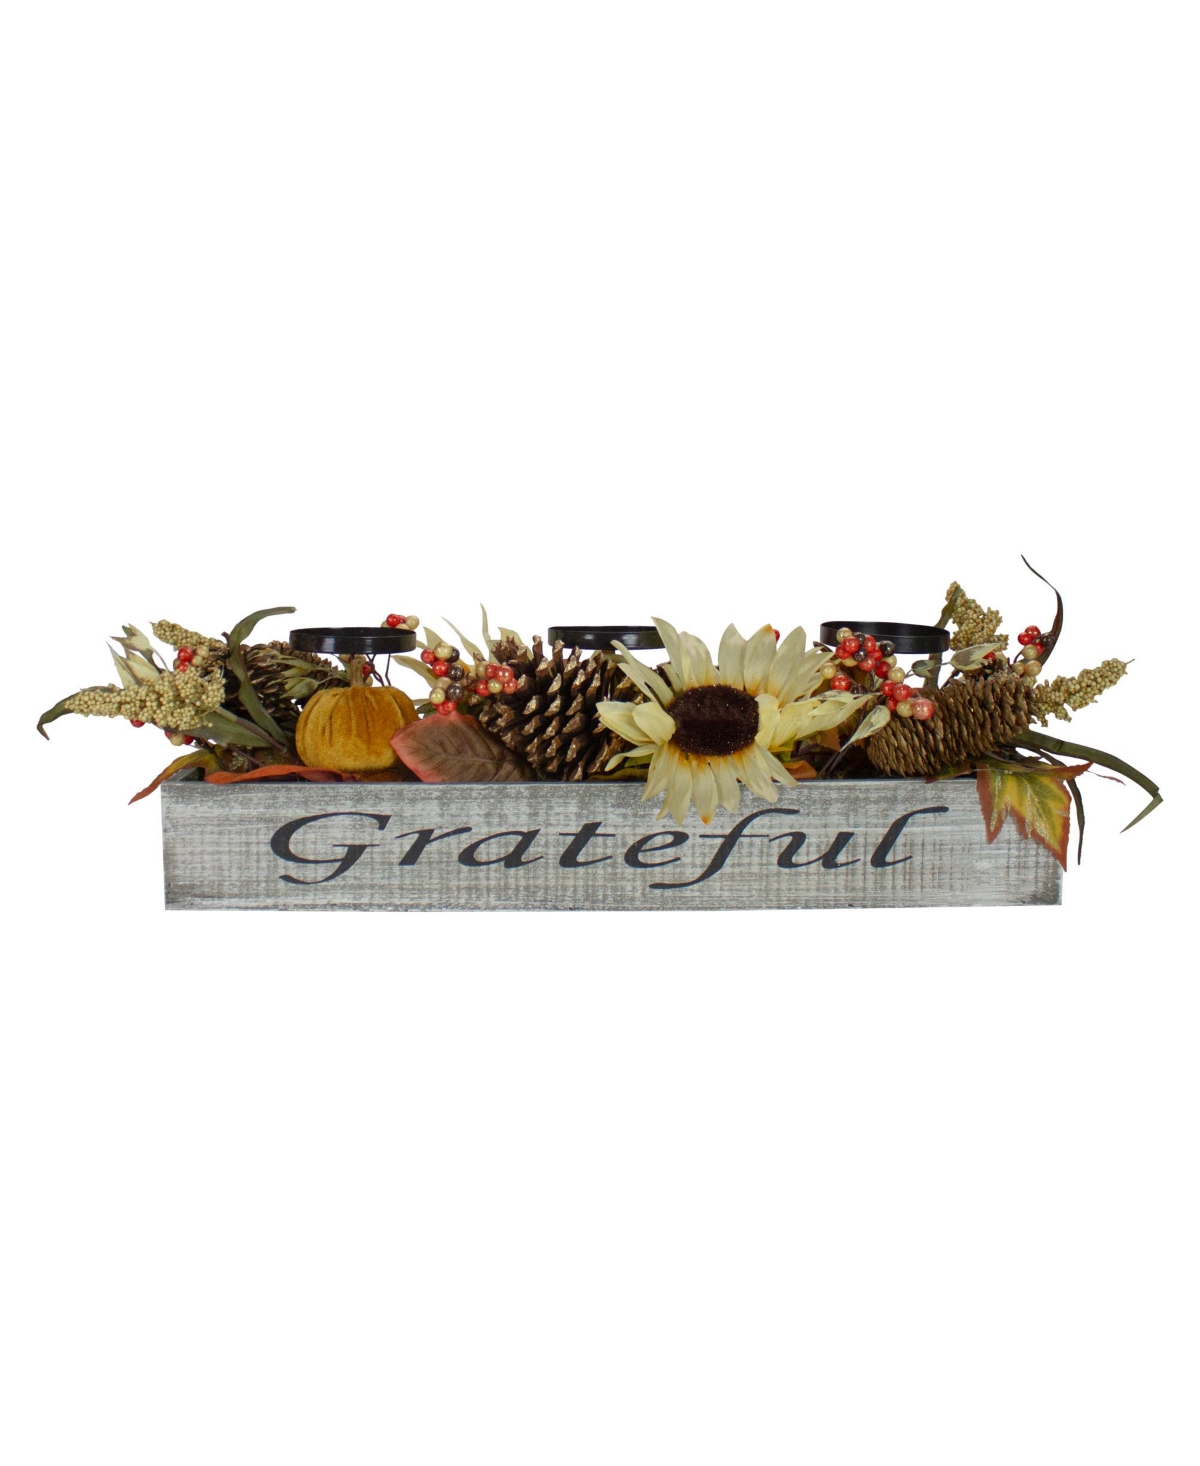 Autumn Harvest Sunflower 3 Piece Candle Holder in a "Grateful" Rustic Wooden Box Centerpiece Set, 30" - Orange